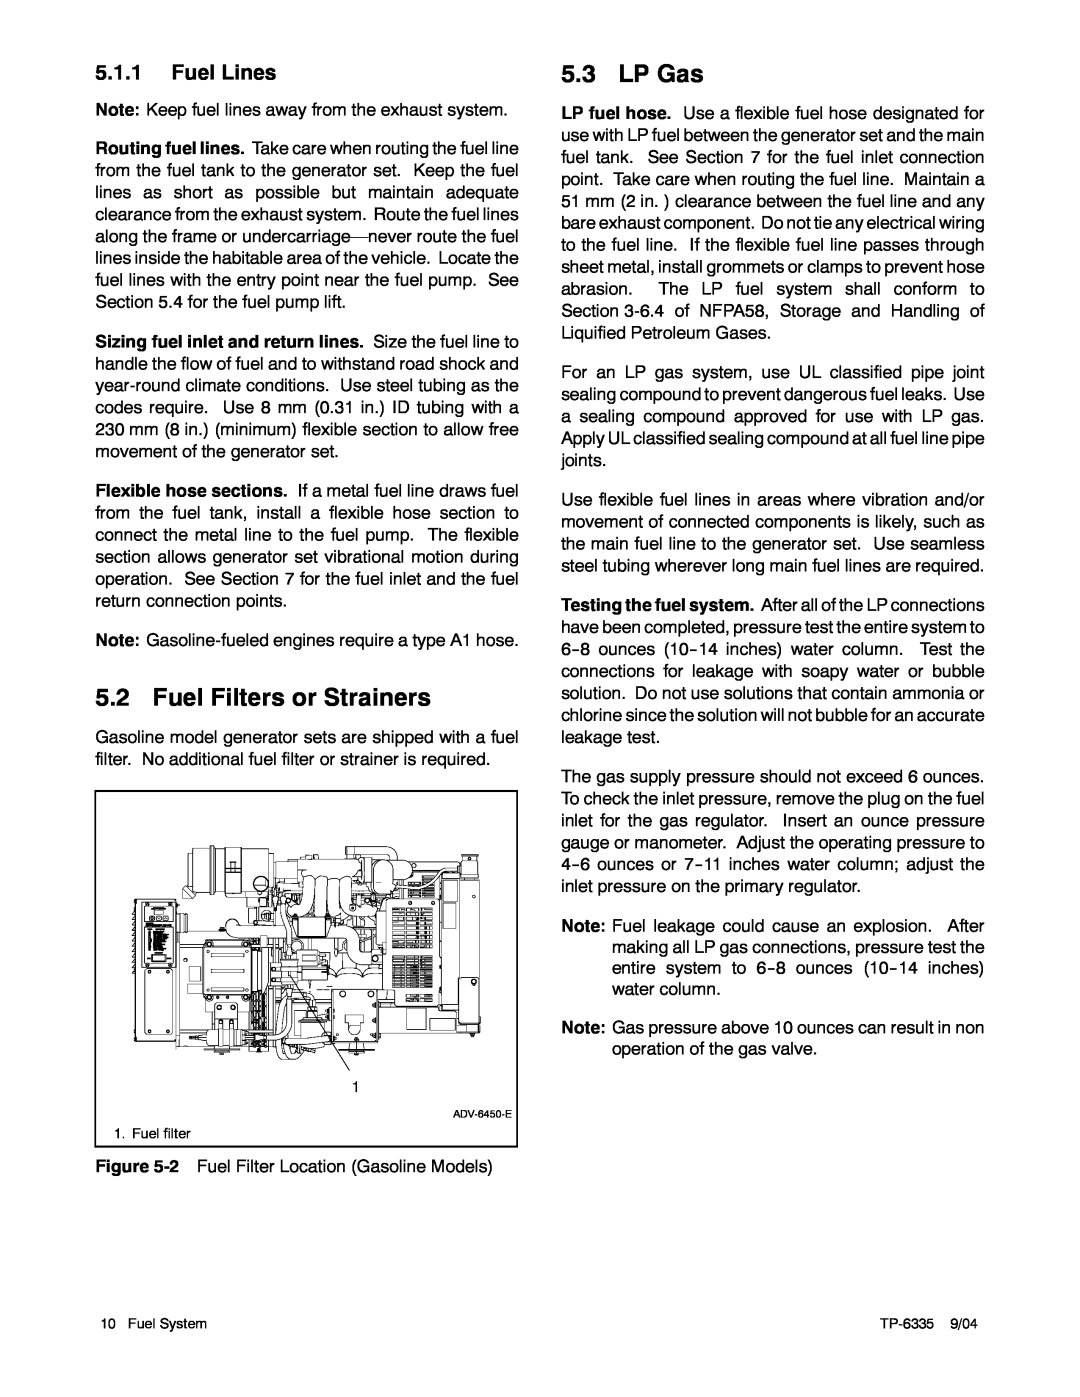 Kohler 10ERG, 15ERG, 13ERG manual Fuel Filters or Strainers, LP Gas, Fuel Lines 